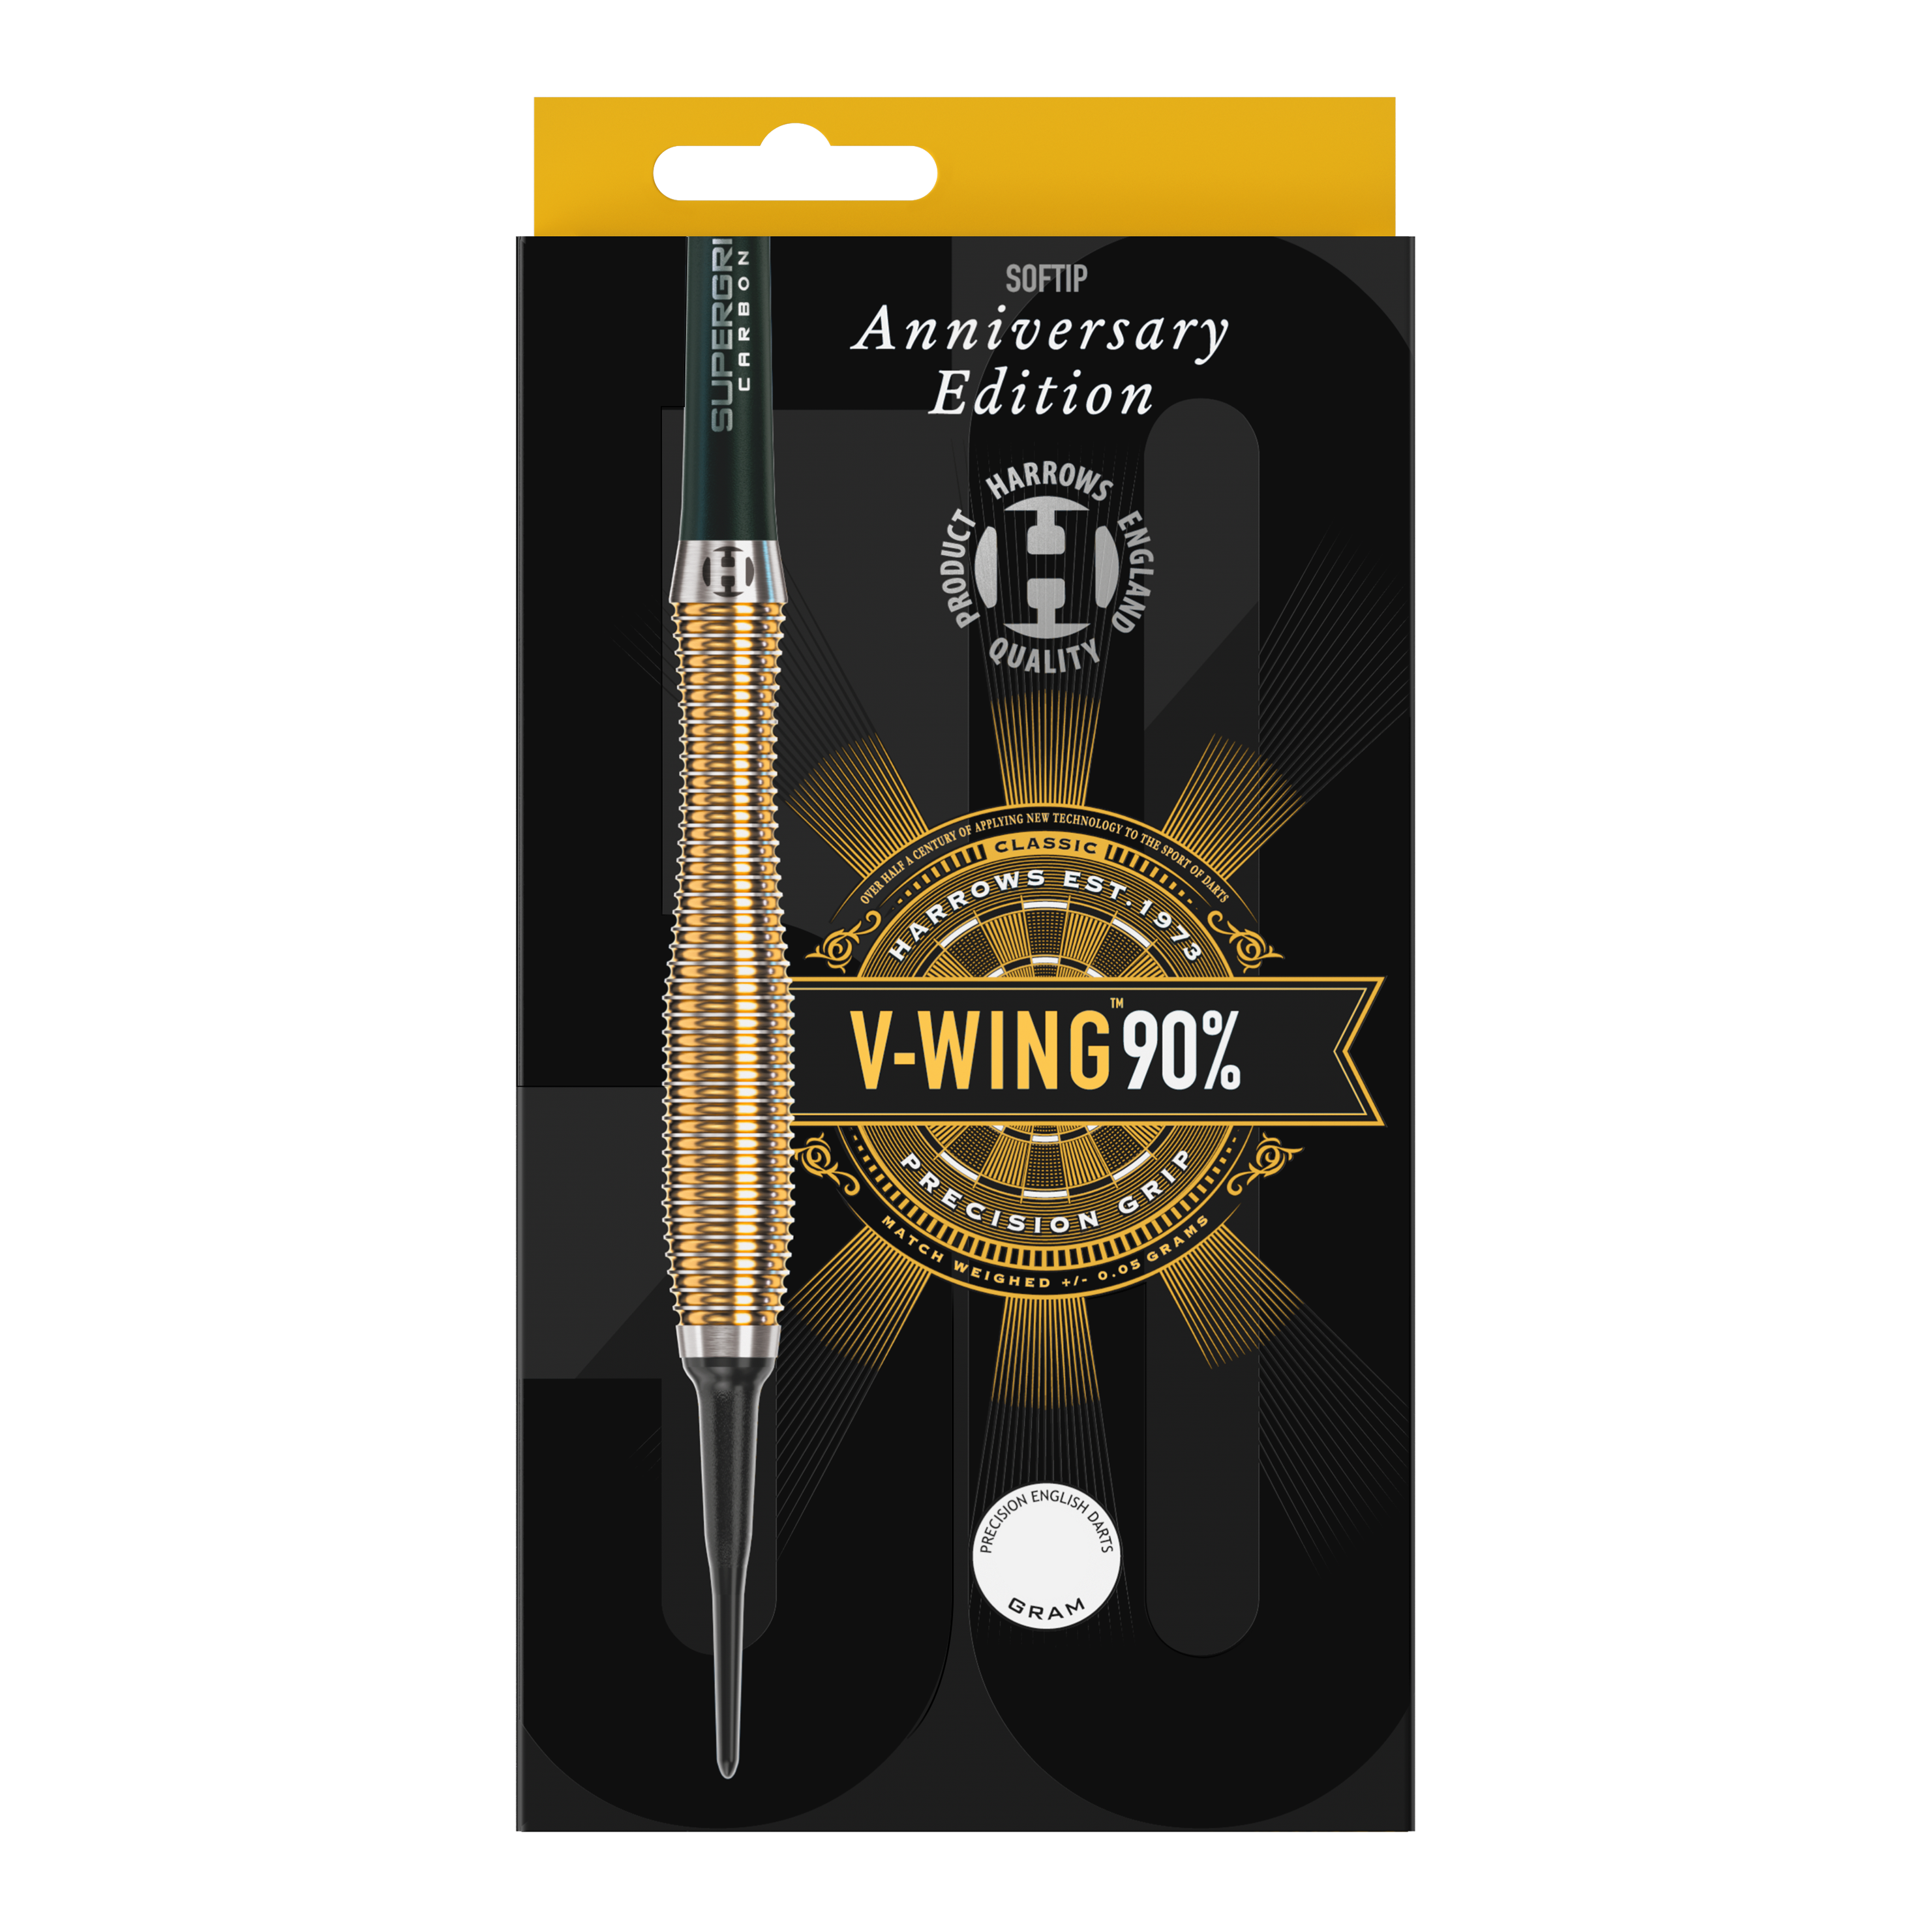 Harrows Anniversary Edition V-Wing Soft Darts - 18g